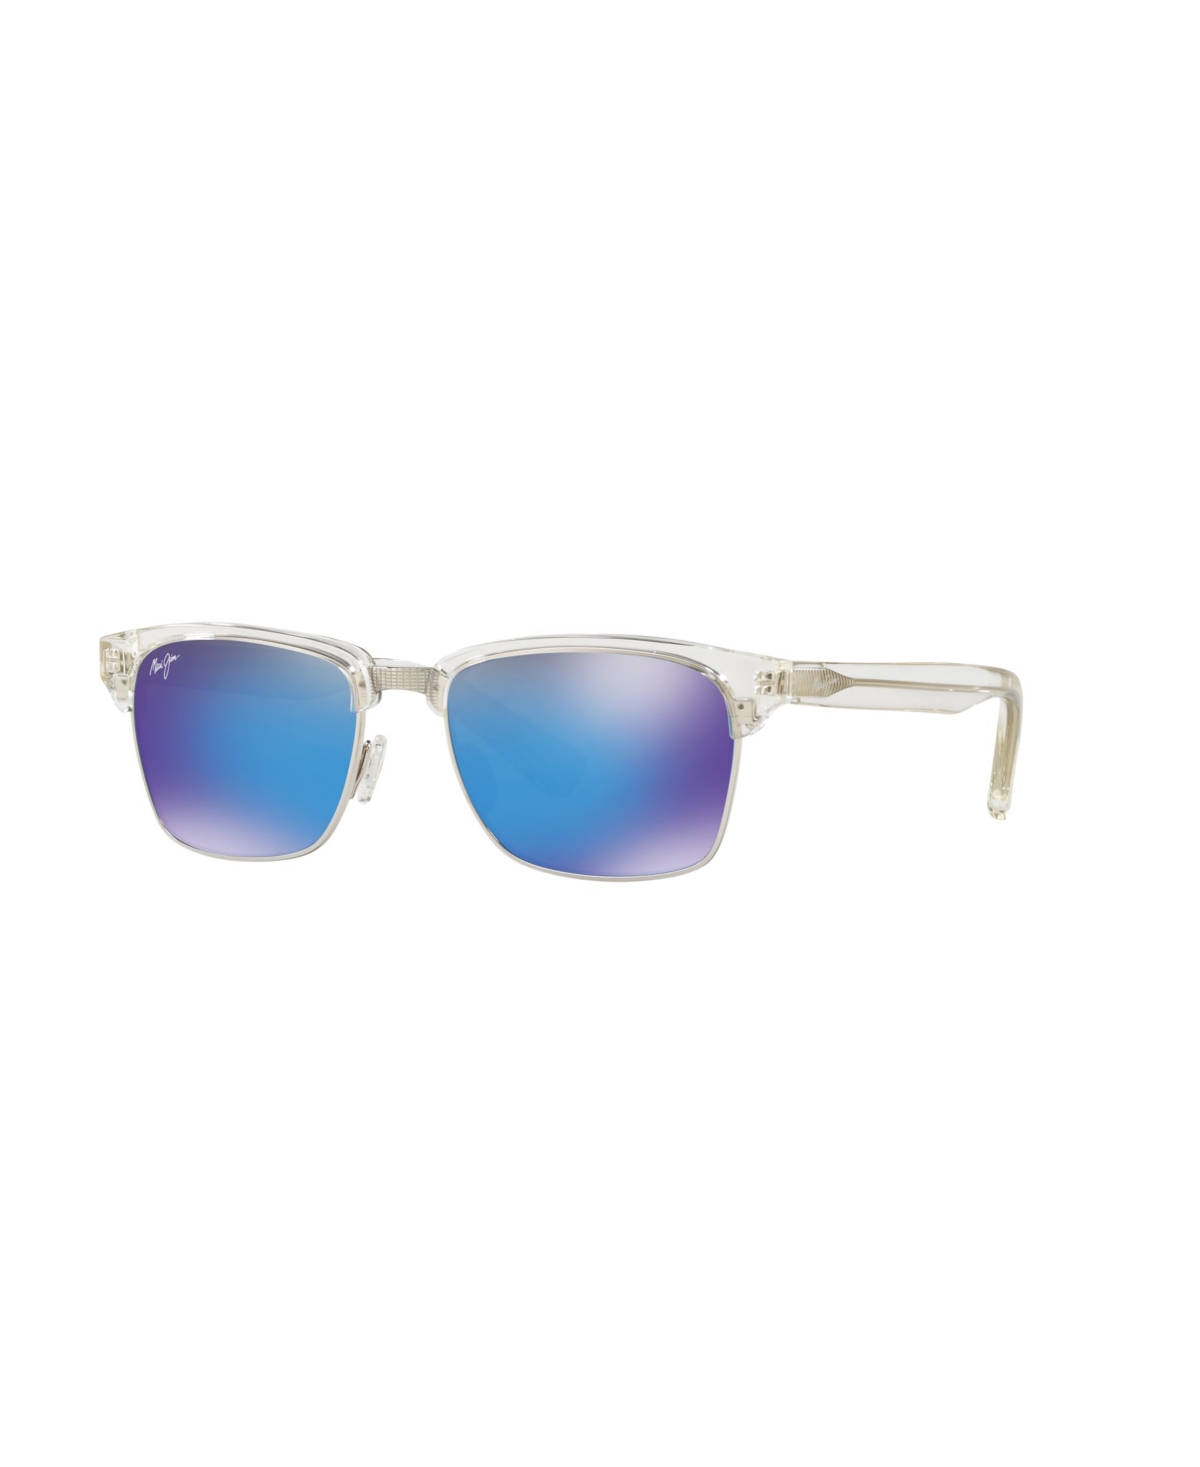 Maui Jim Unisex Polarized Sunglasses, Kawika Mj000549 In Clear